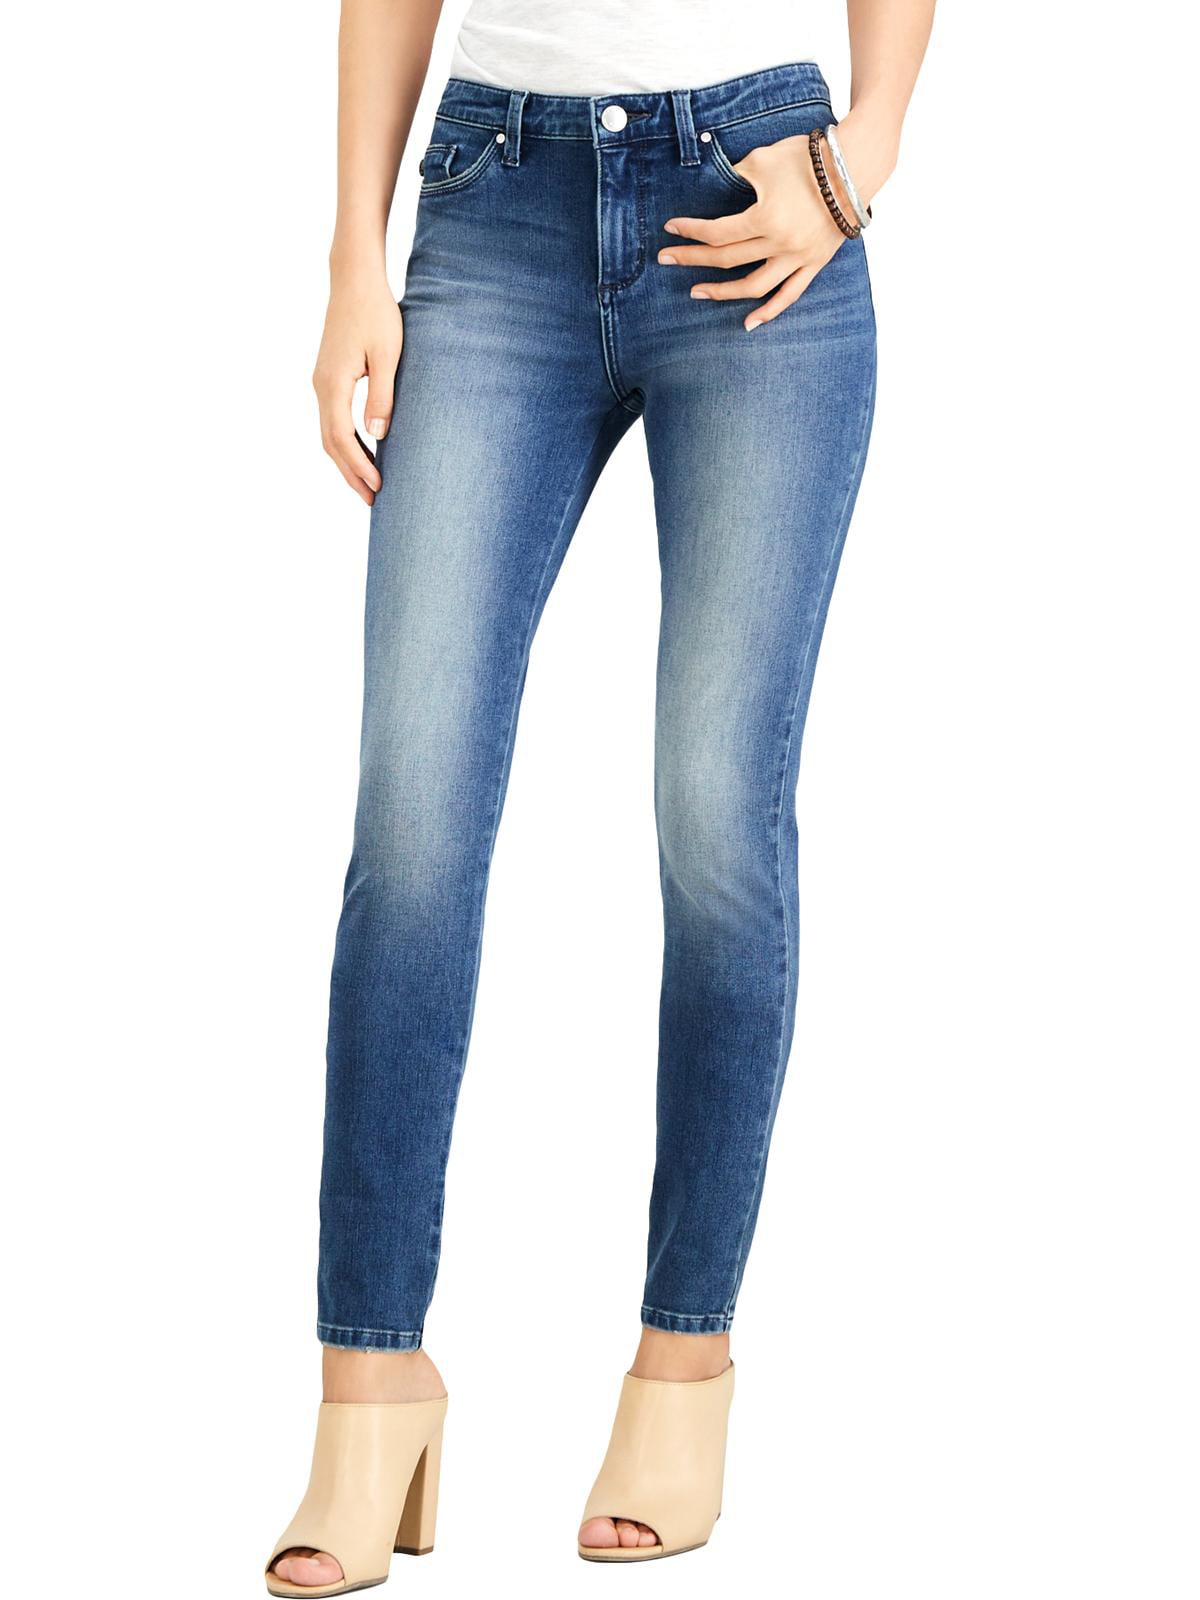 Lee - Lee Womens Denim Mid-Rise Skinny Jeans - Walmart.com - Walmart.com